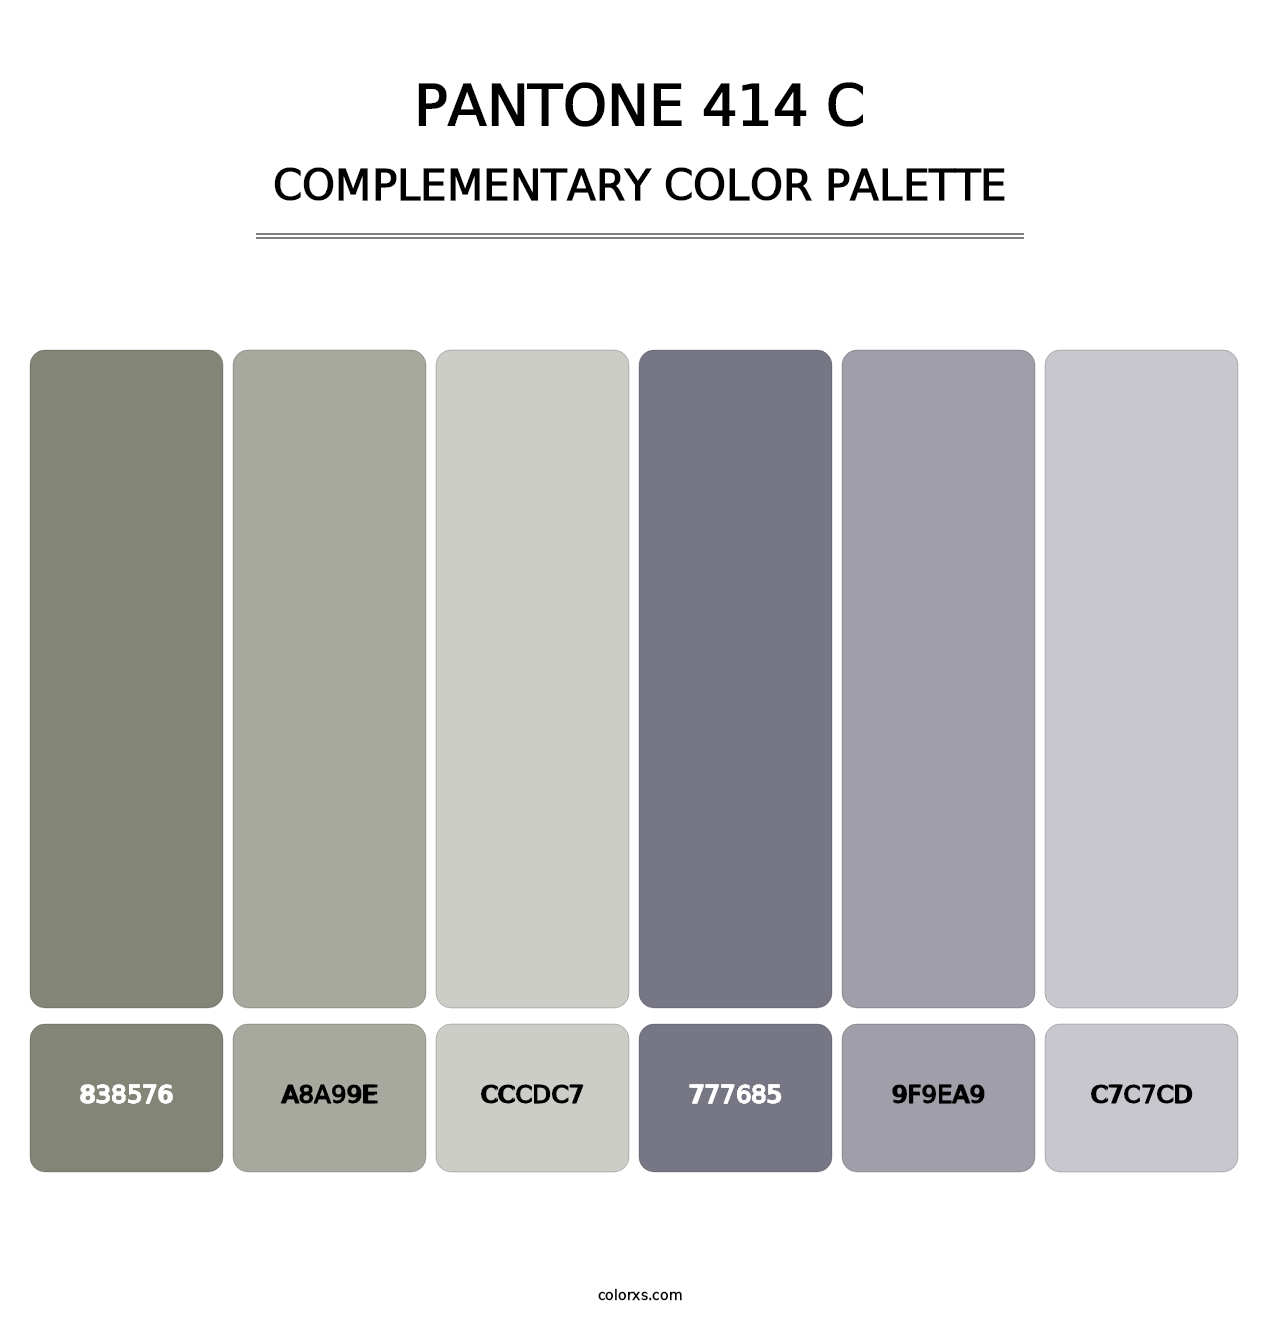 PANTONE 414 C - Complementary Color Palette